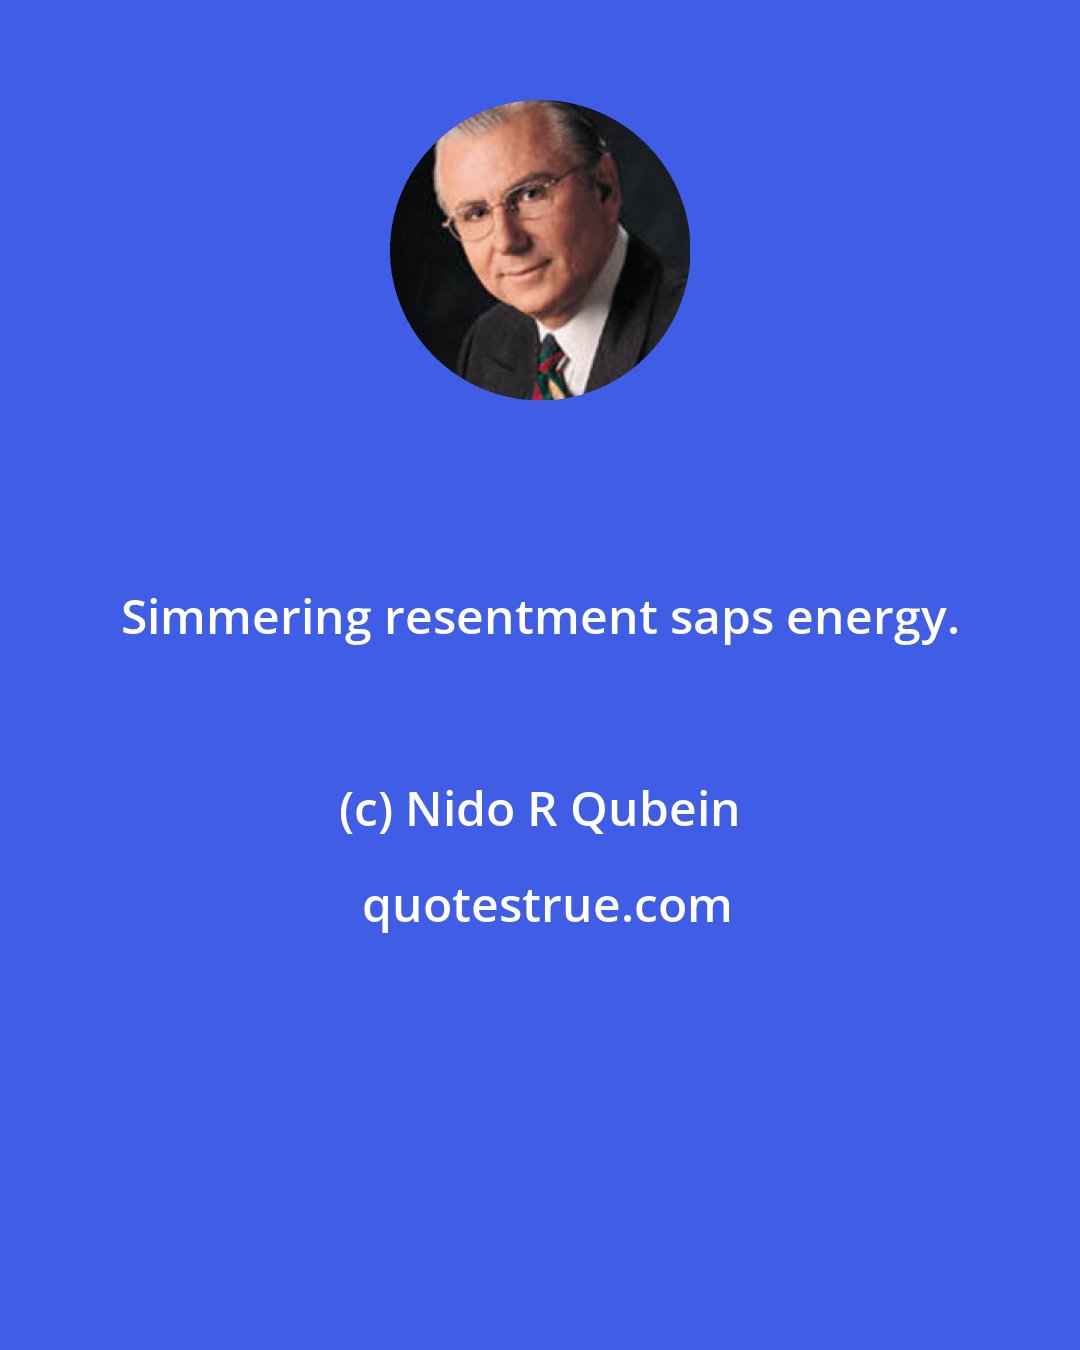 Nido R Qubein: Simmering resentment saps energy.